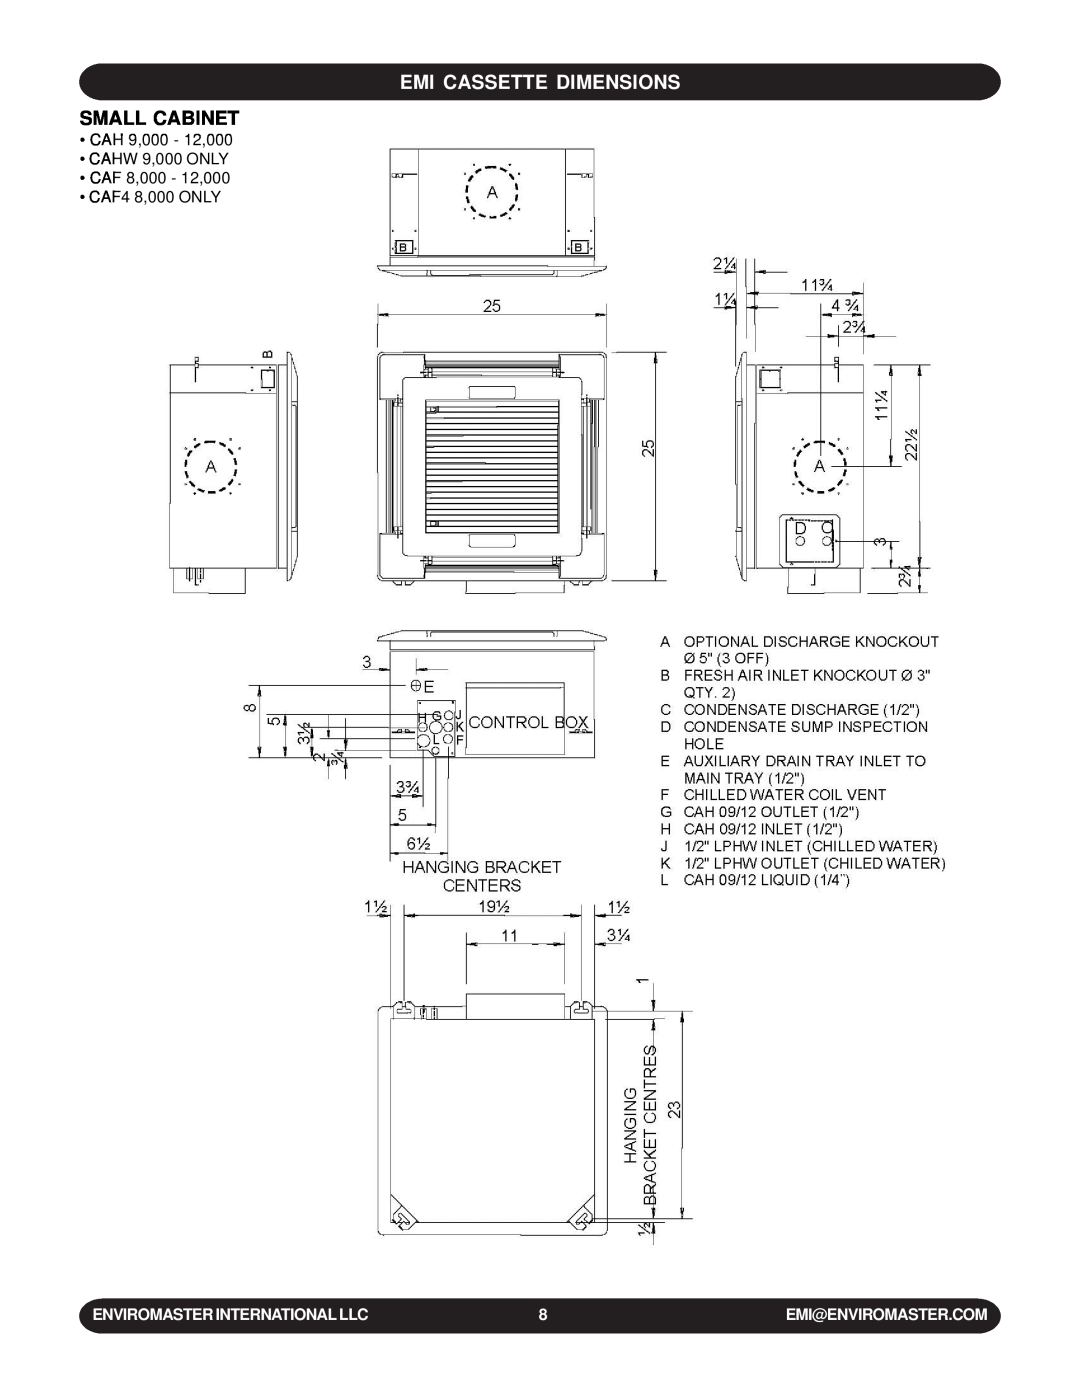 EMI WLCA installation manual Emi Cassette Dimensions, Small Cabinet, Enviromaster International Llc 